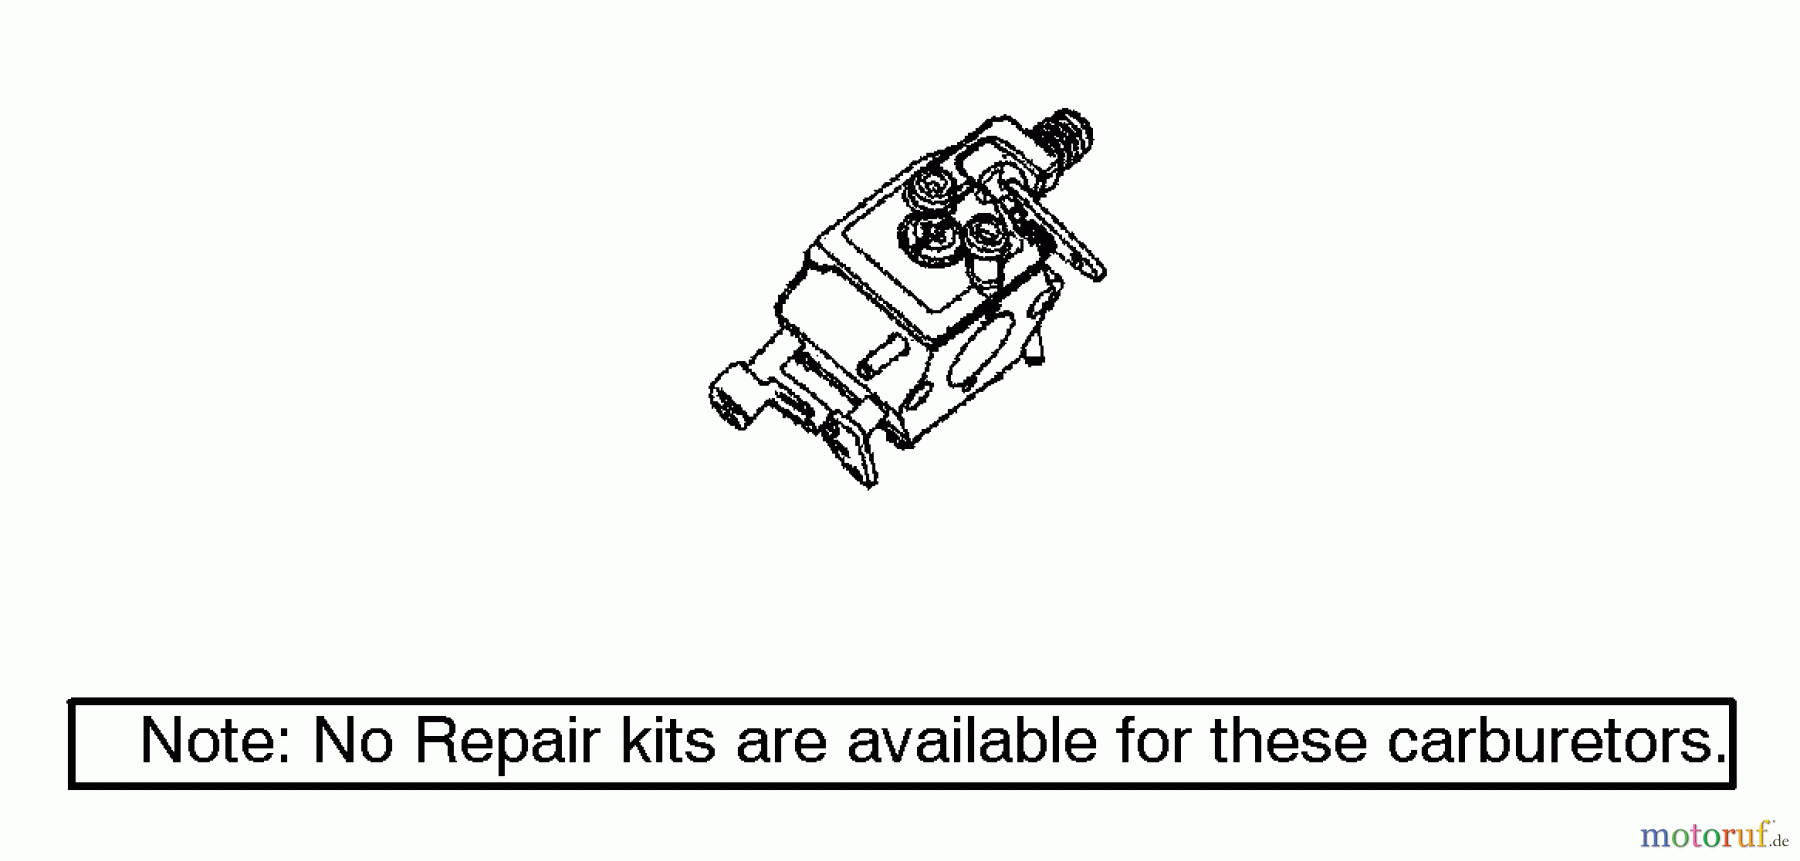  Poulan / Weed Eater Motorsägen 2050 (Type 7) - Poulan Pioneer Chainsaw Carburetor Assembly Kits 530071620/530071820/530071821